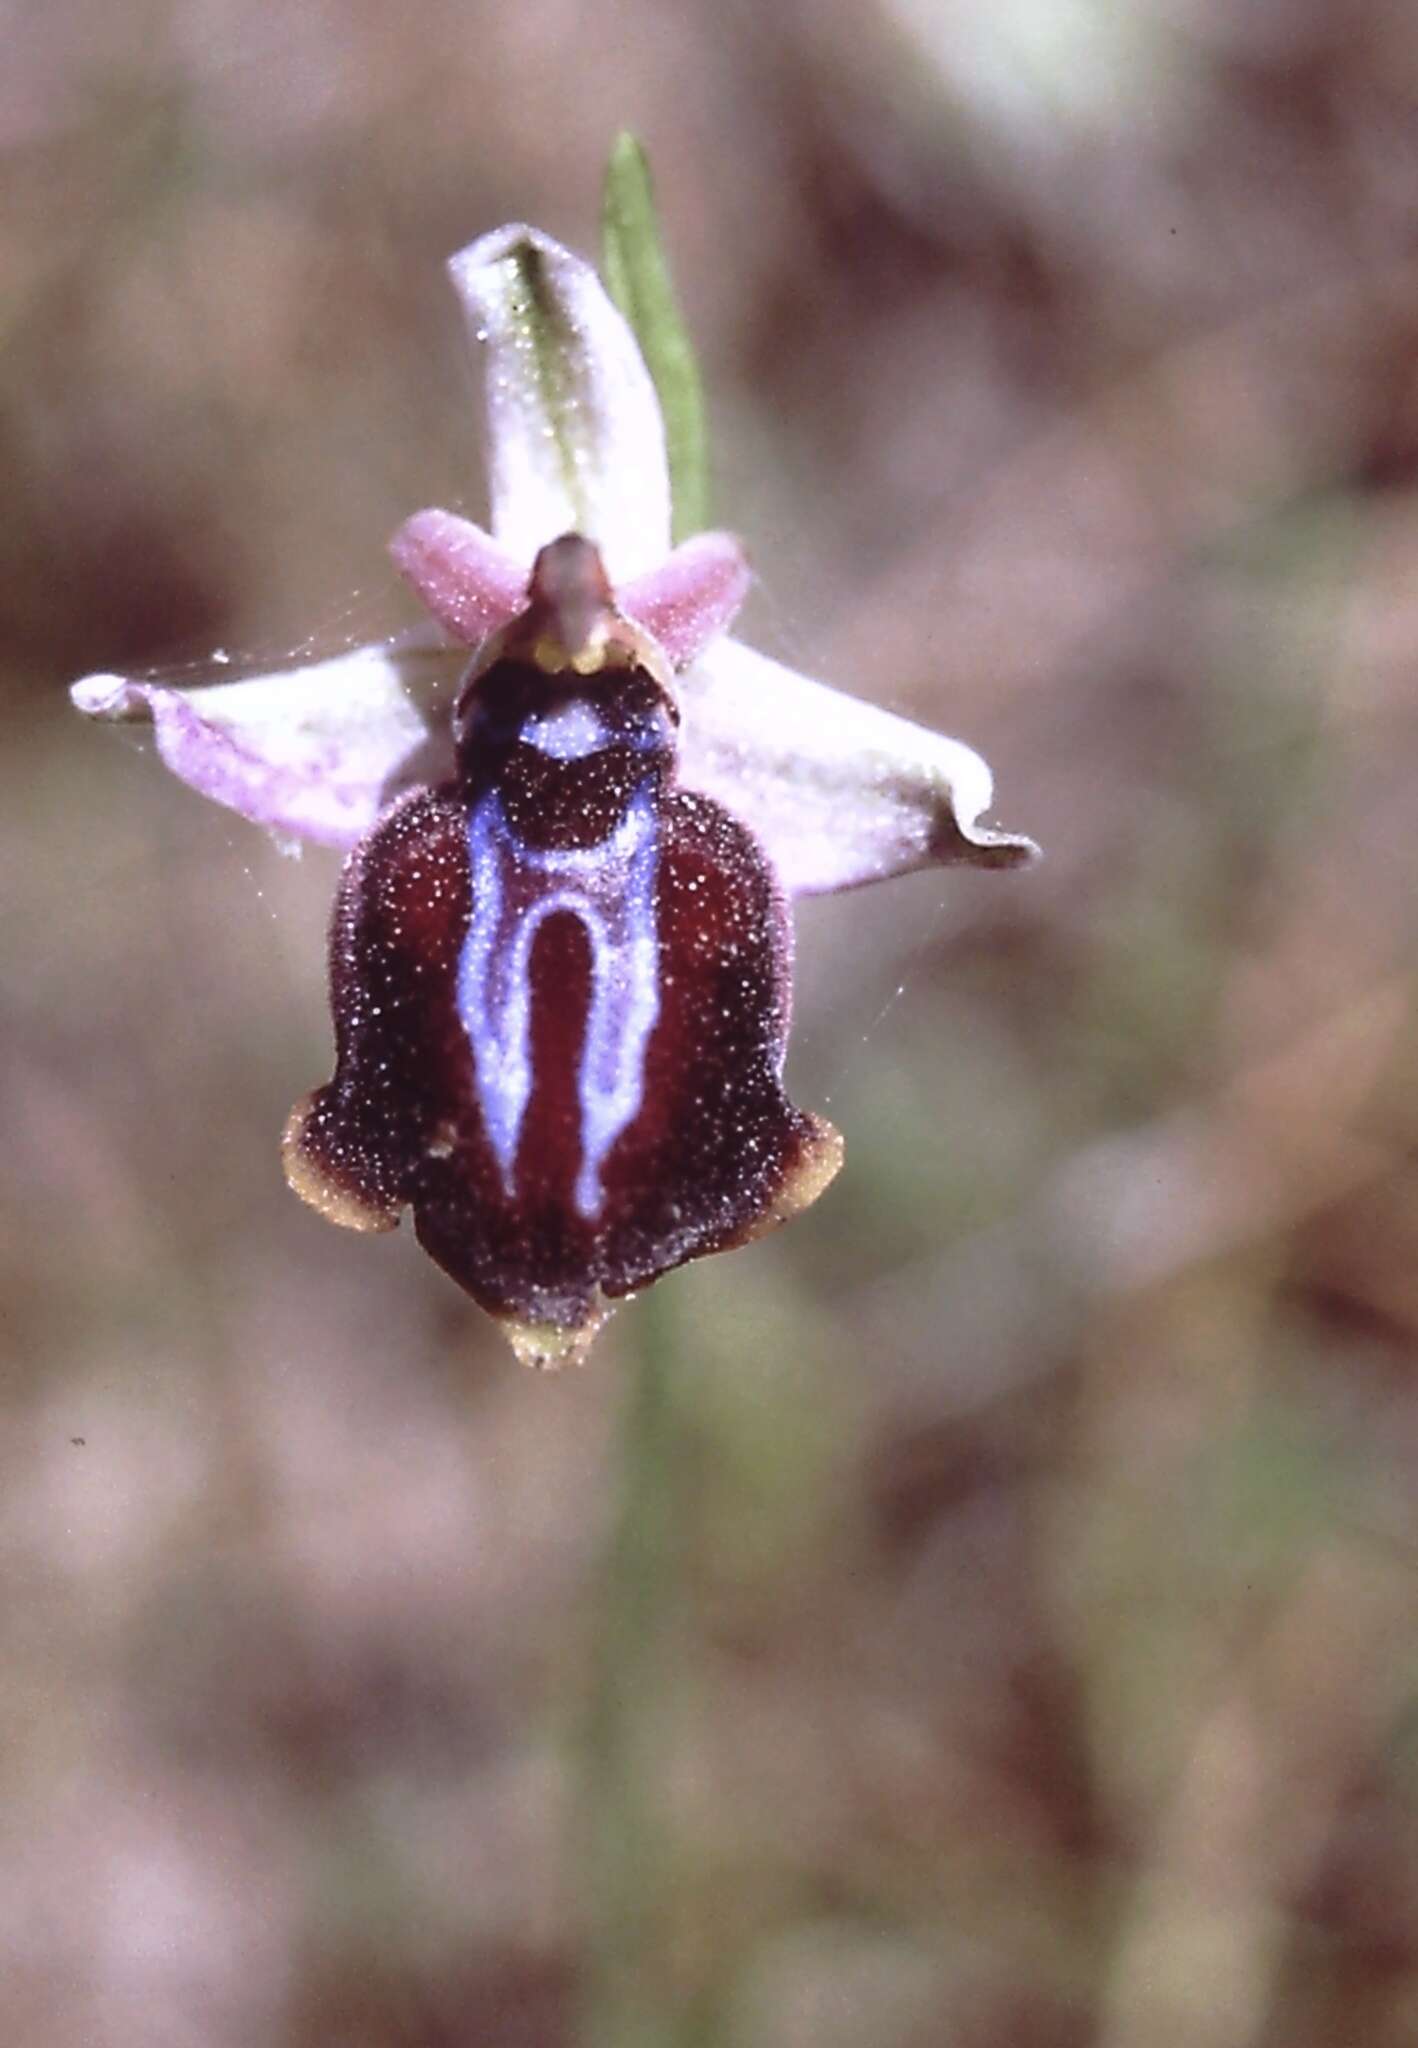 Image of Ophrys sphegodes subsp. spruneri (Nyman) E. Nelson